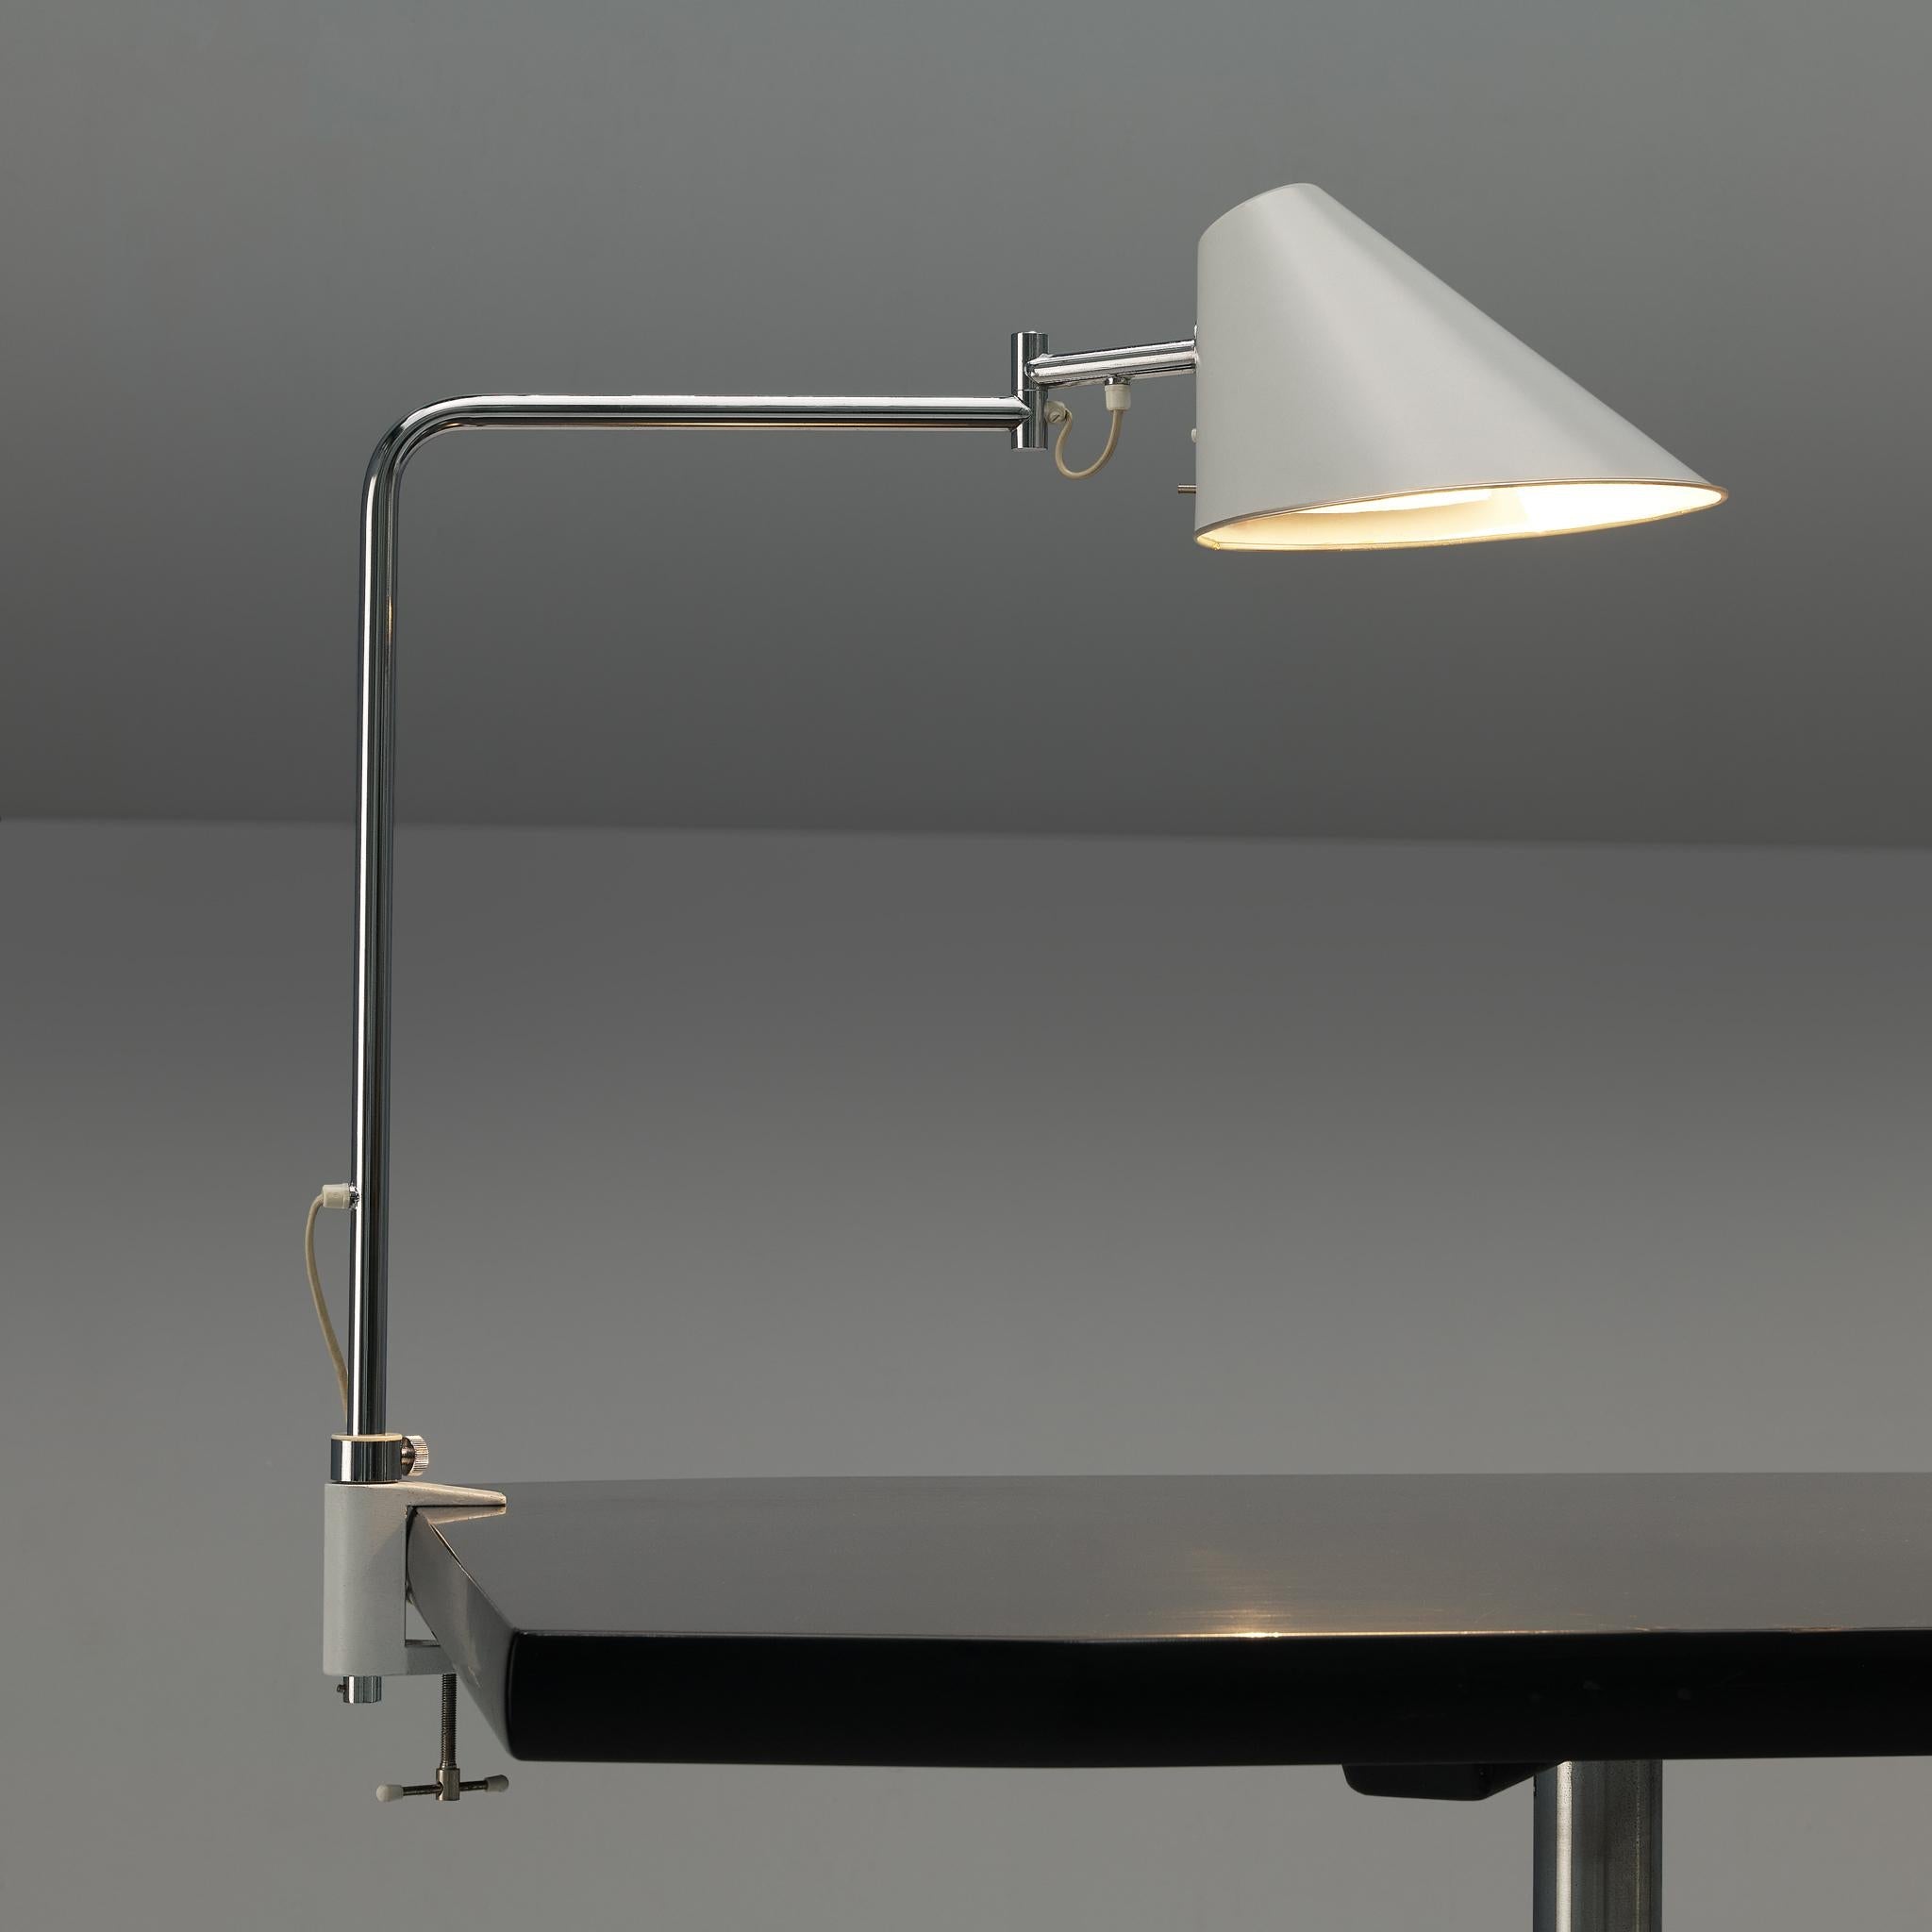 S. Björklund and L. Gustafsson Swedish 'Delux' Desk Lamp